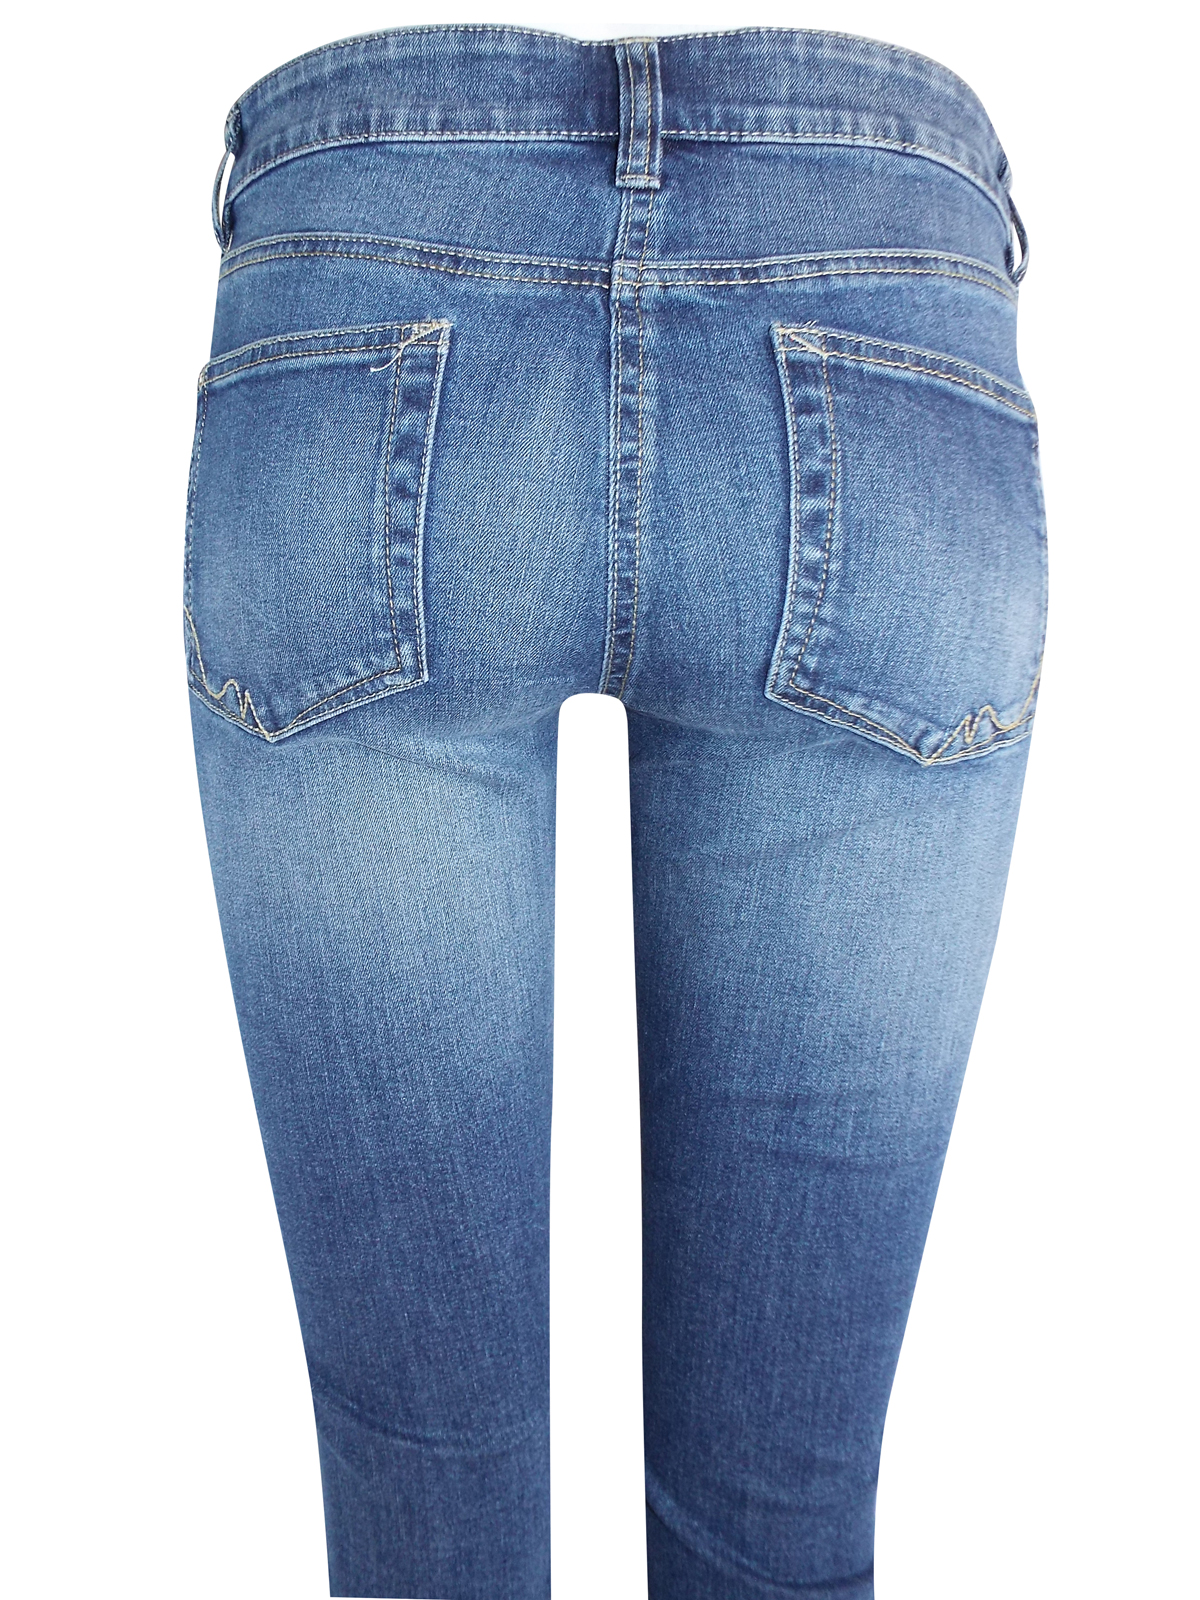 N3XT DENIM Skinny Fit 5-Pocket Denim Jeans - Size 6 to 22 (Petite ...